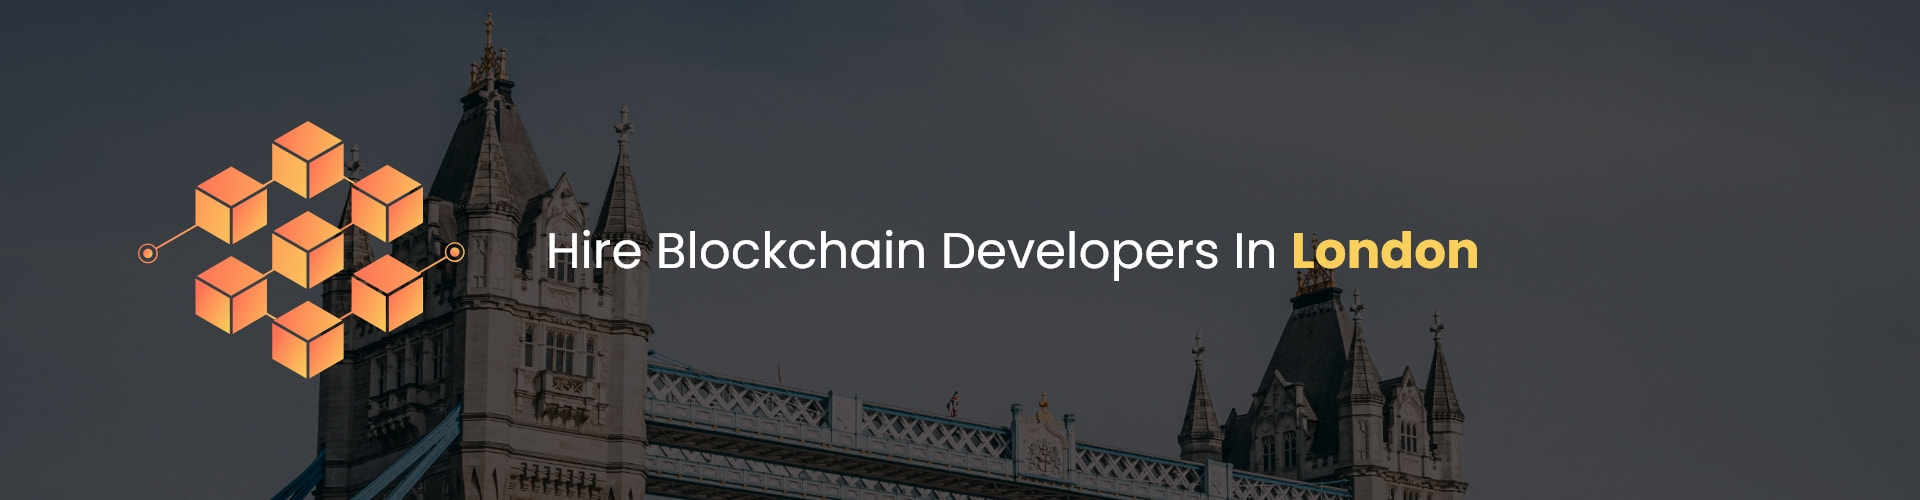 hire blockchain developers in london